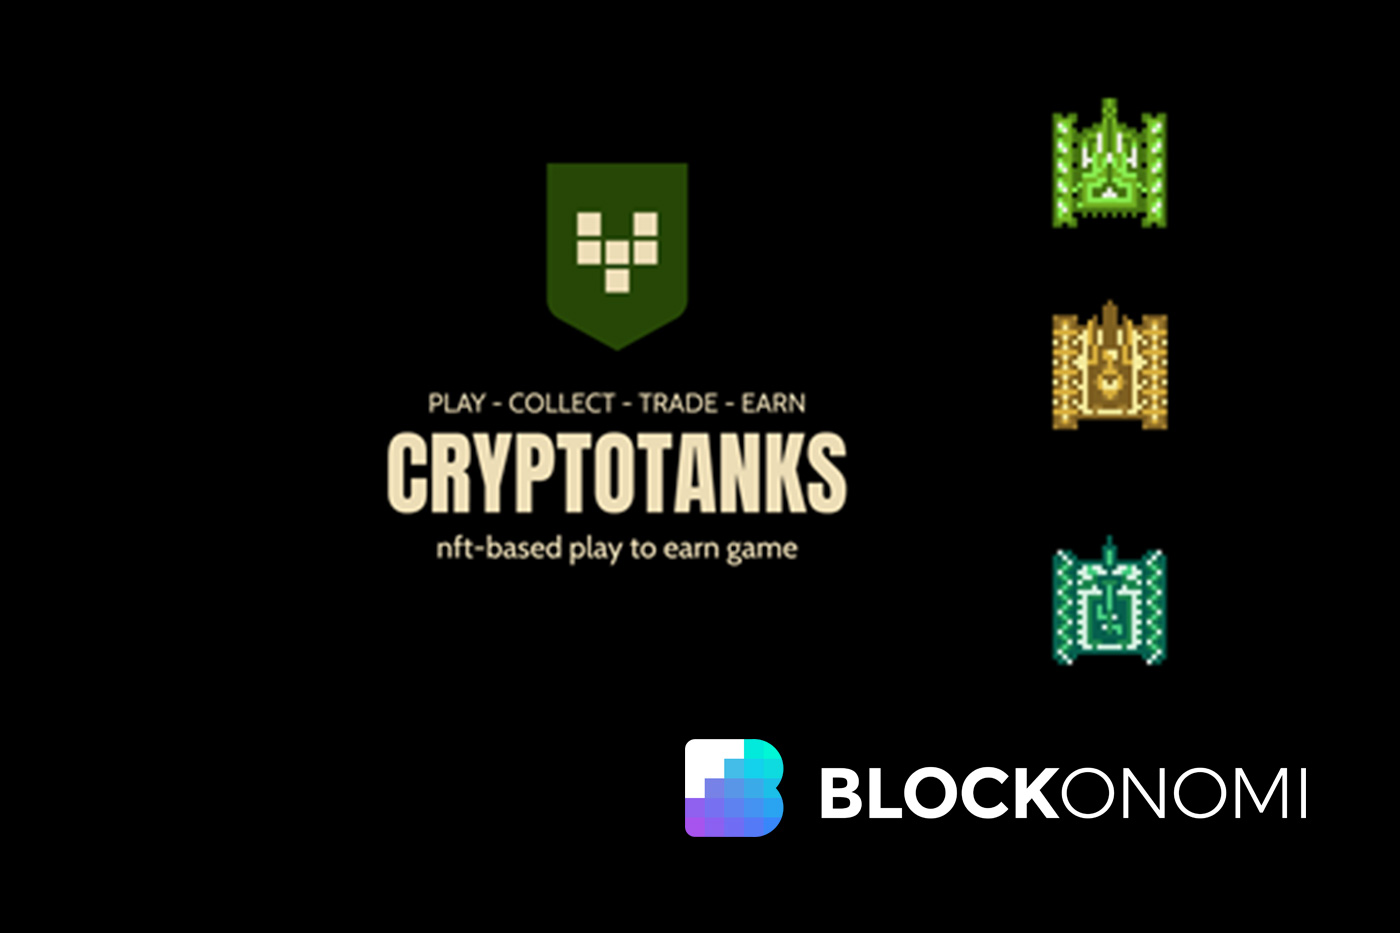 crypto tanks nft game